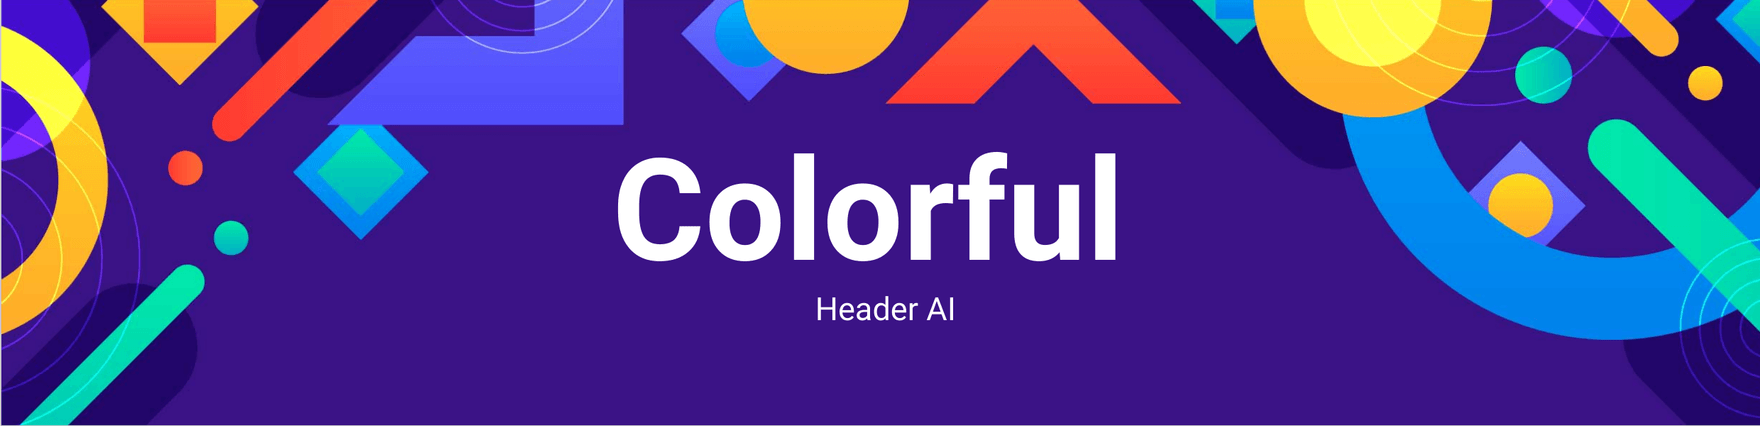 Colorful Header AI Template